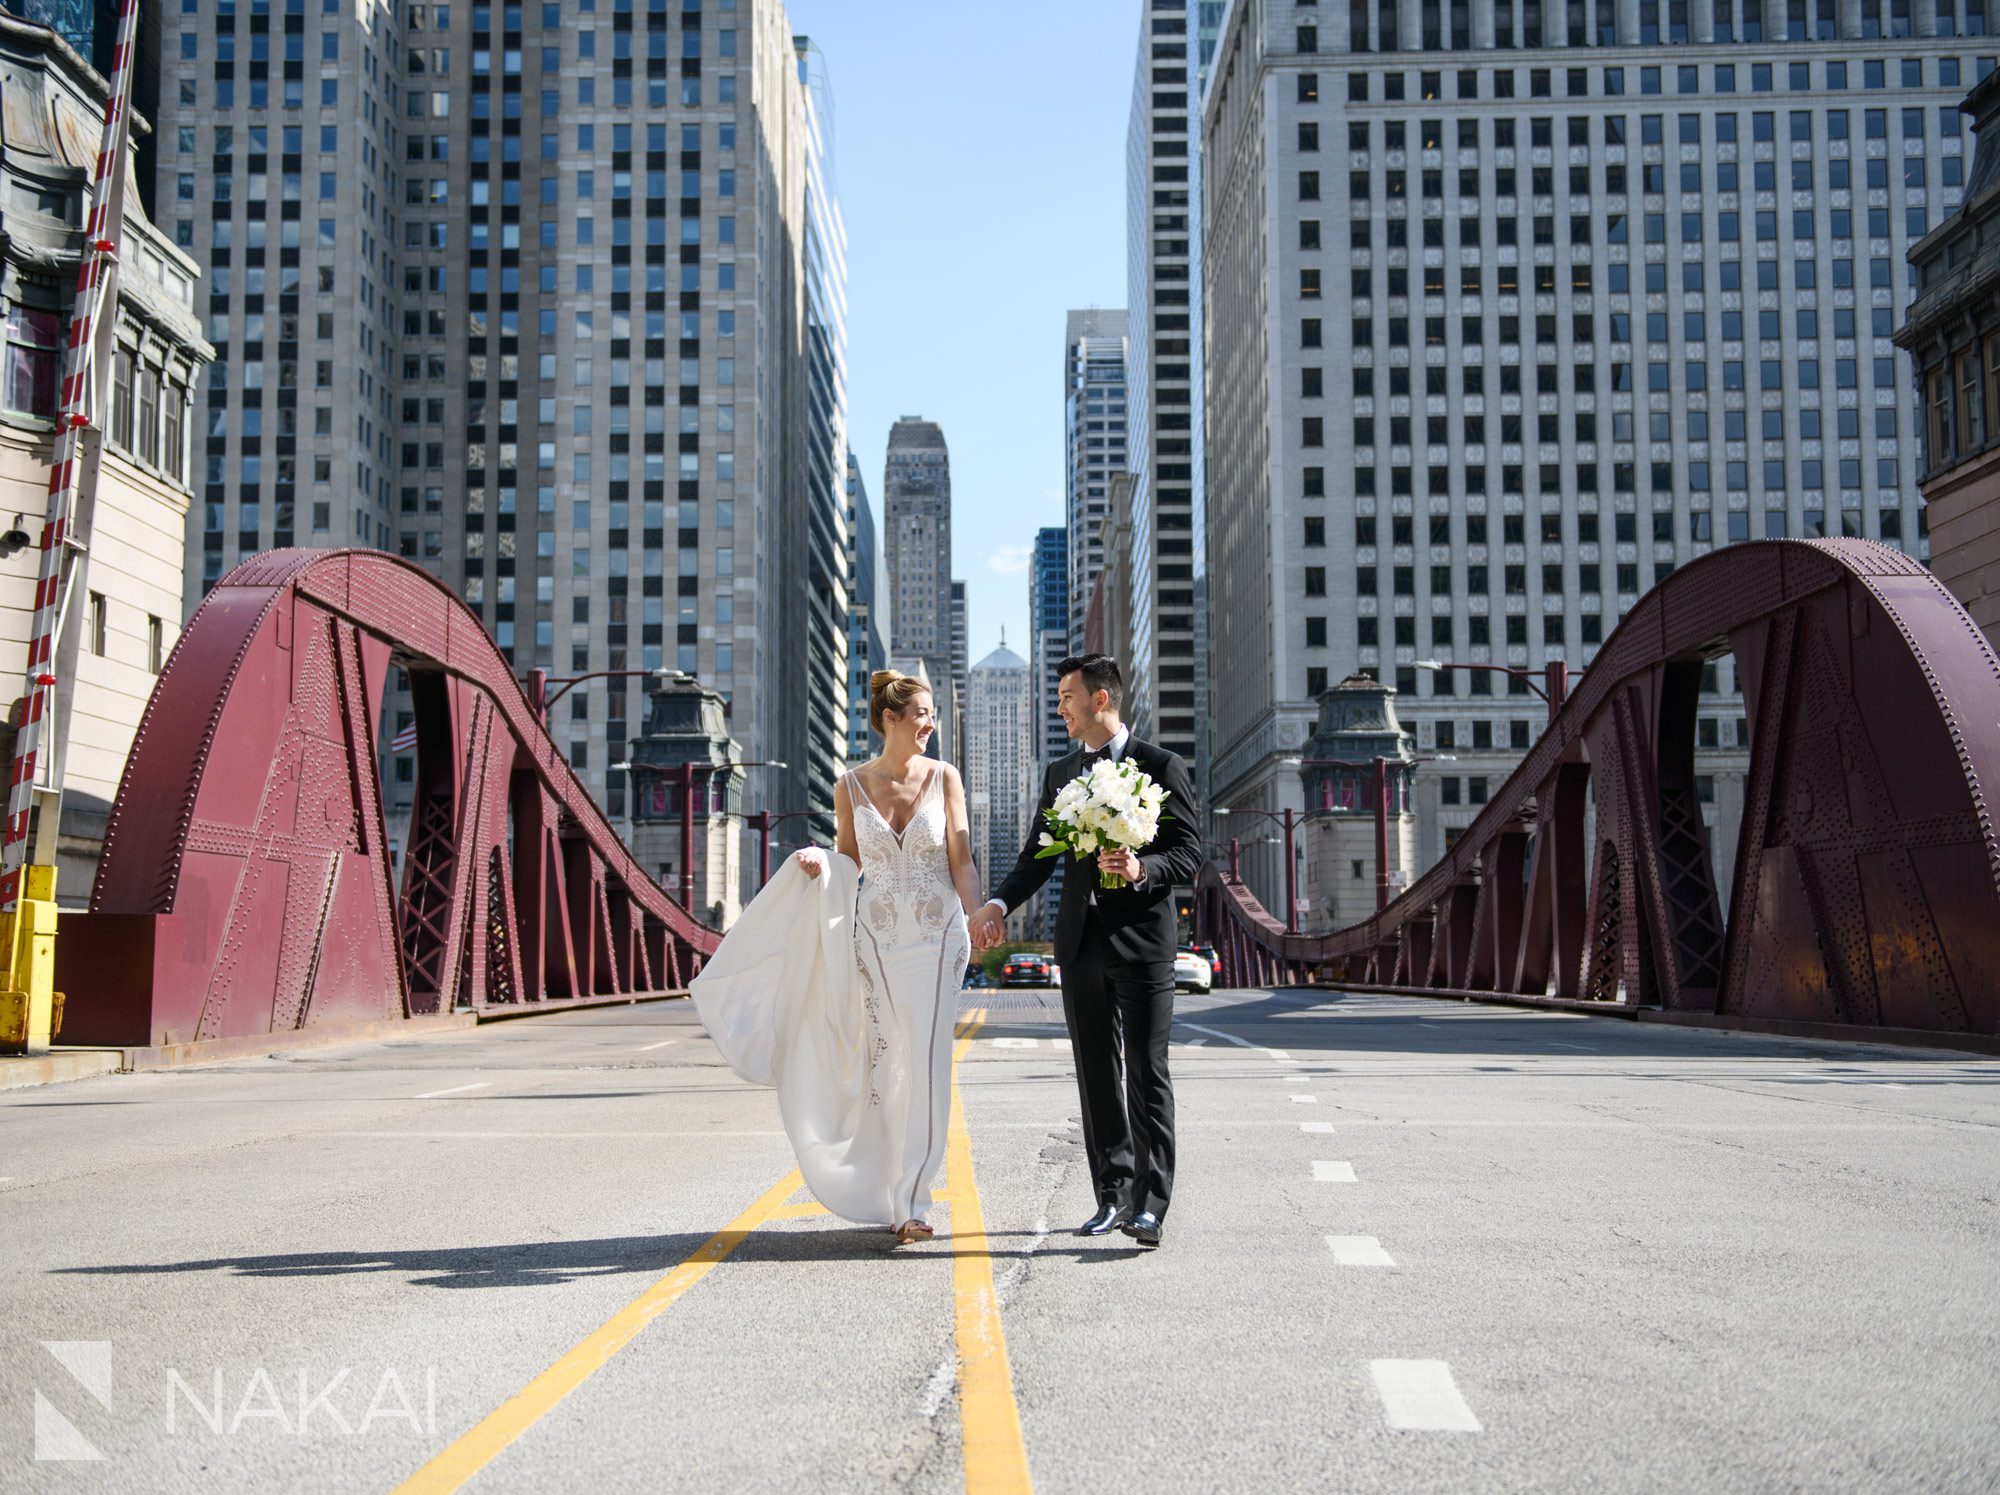 Lasalle st wedding photo Chicago bridge bride groom